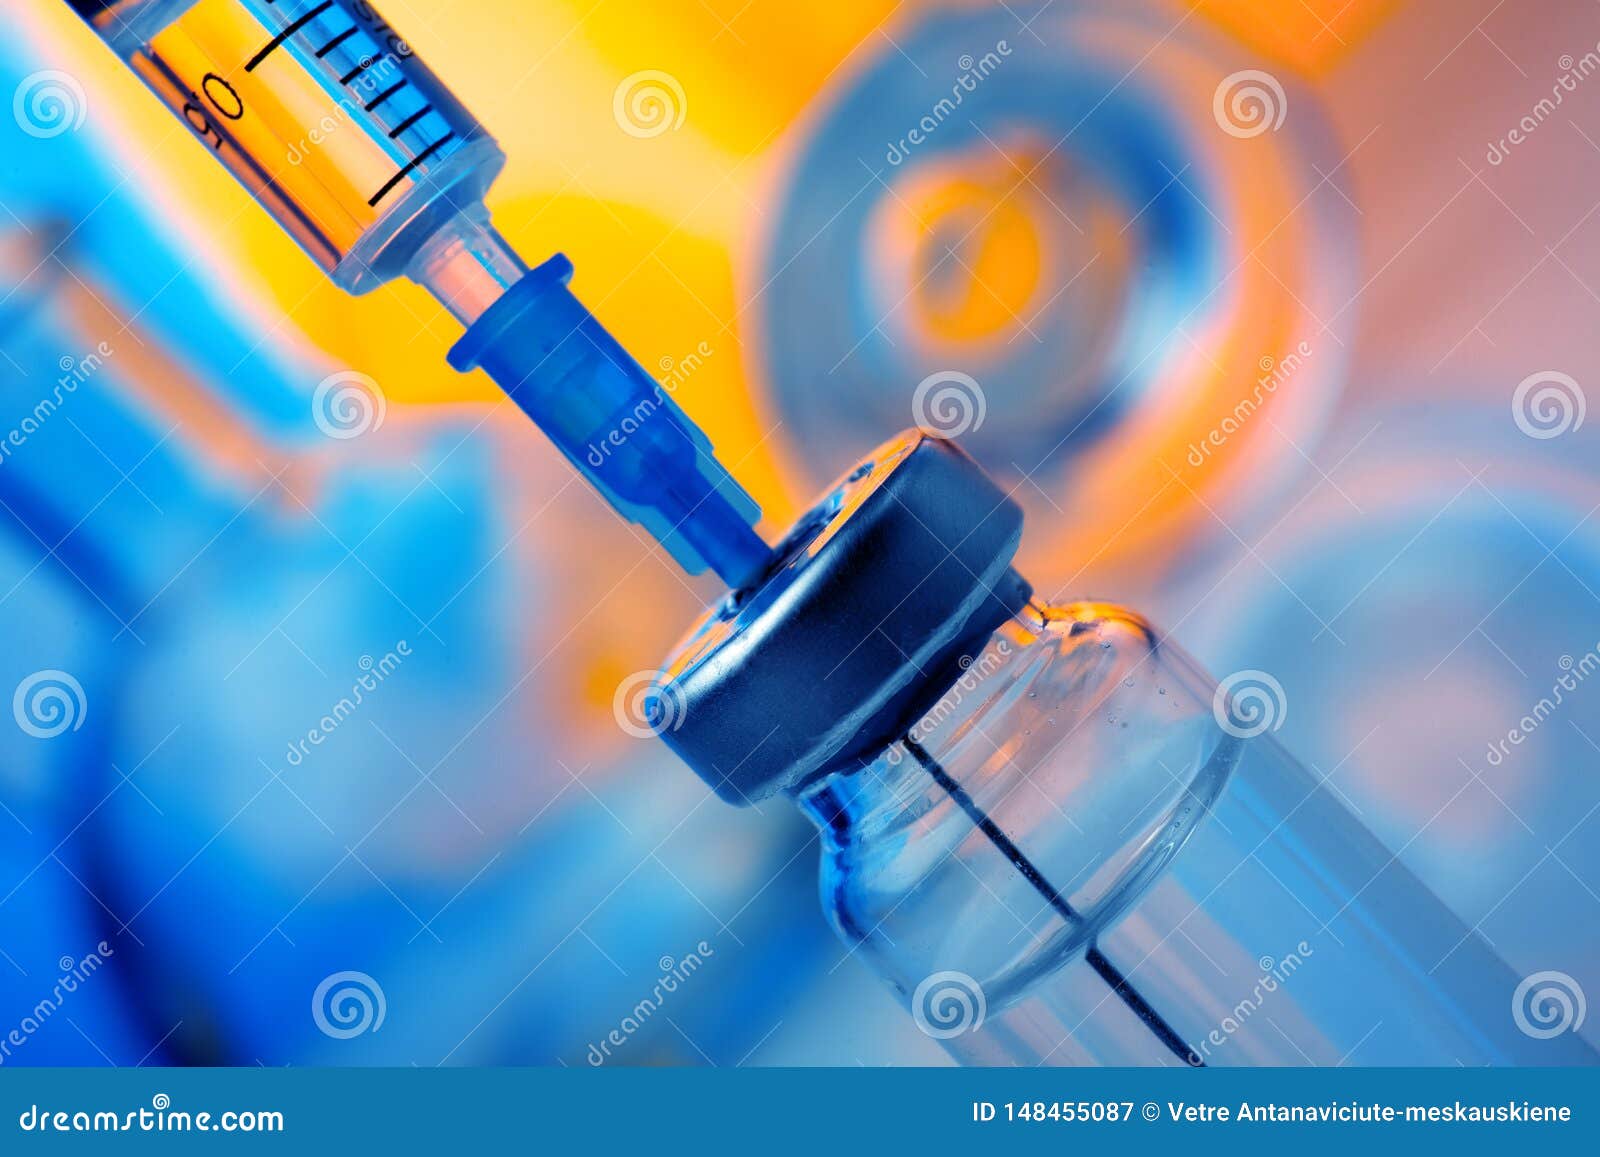 vaccine vial dose flu shot drug needle syringe,medical concept vaccination hypodermic injection